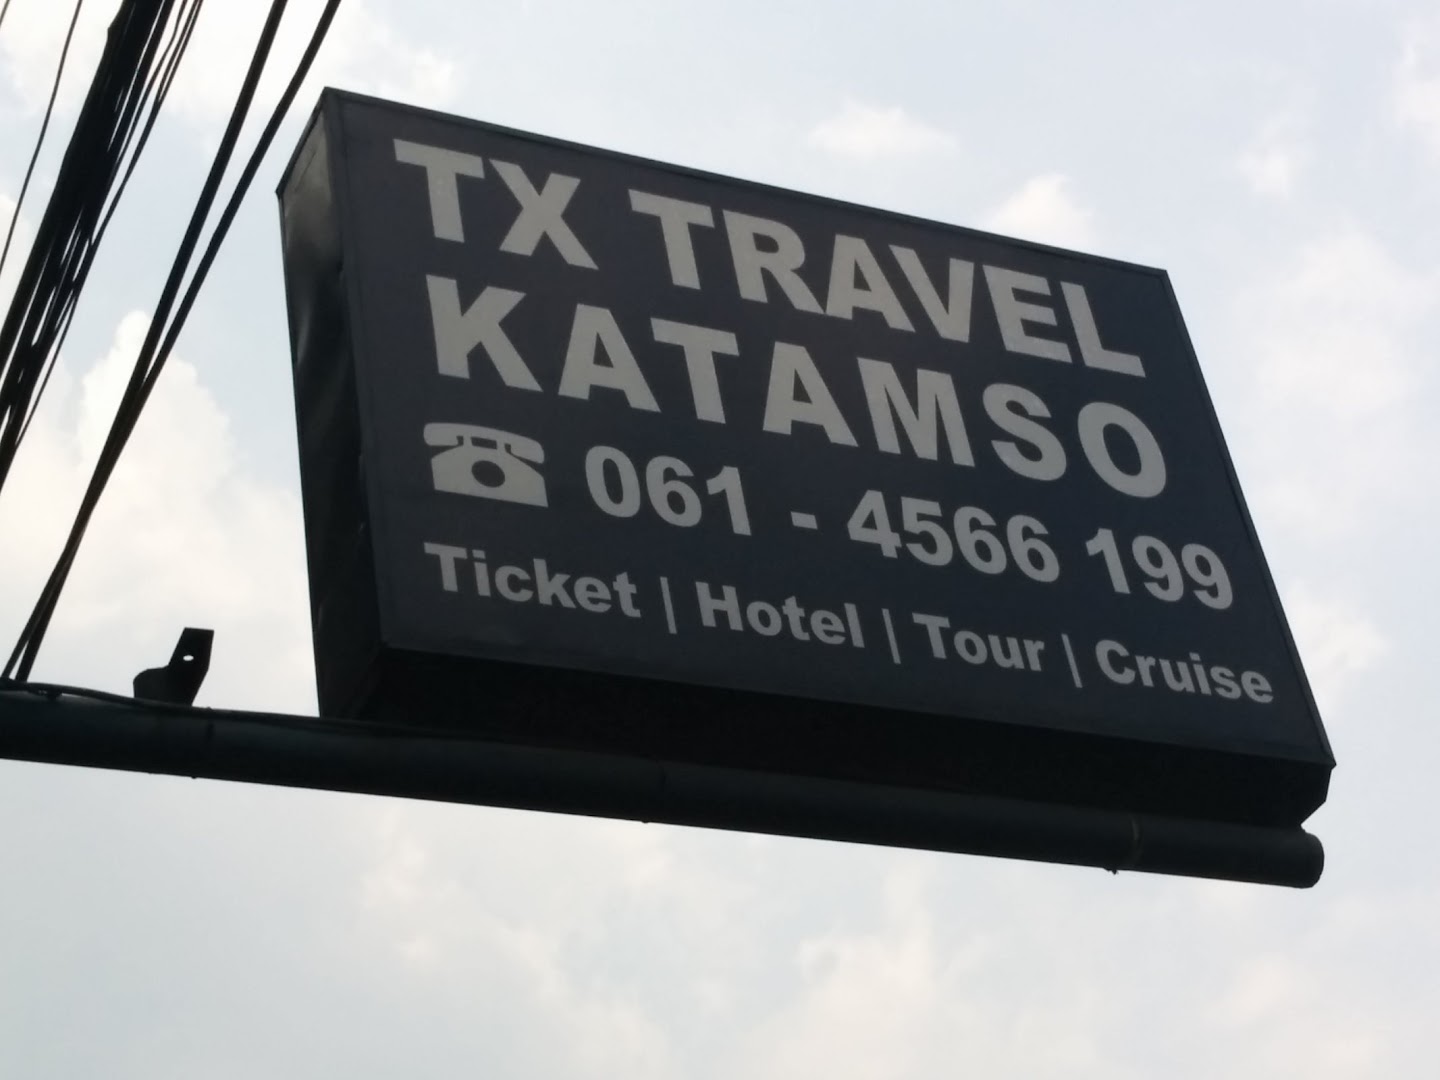 Gambar Tx Travel Katamso